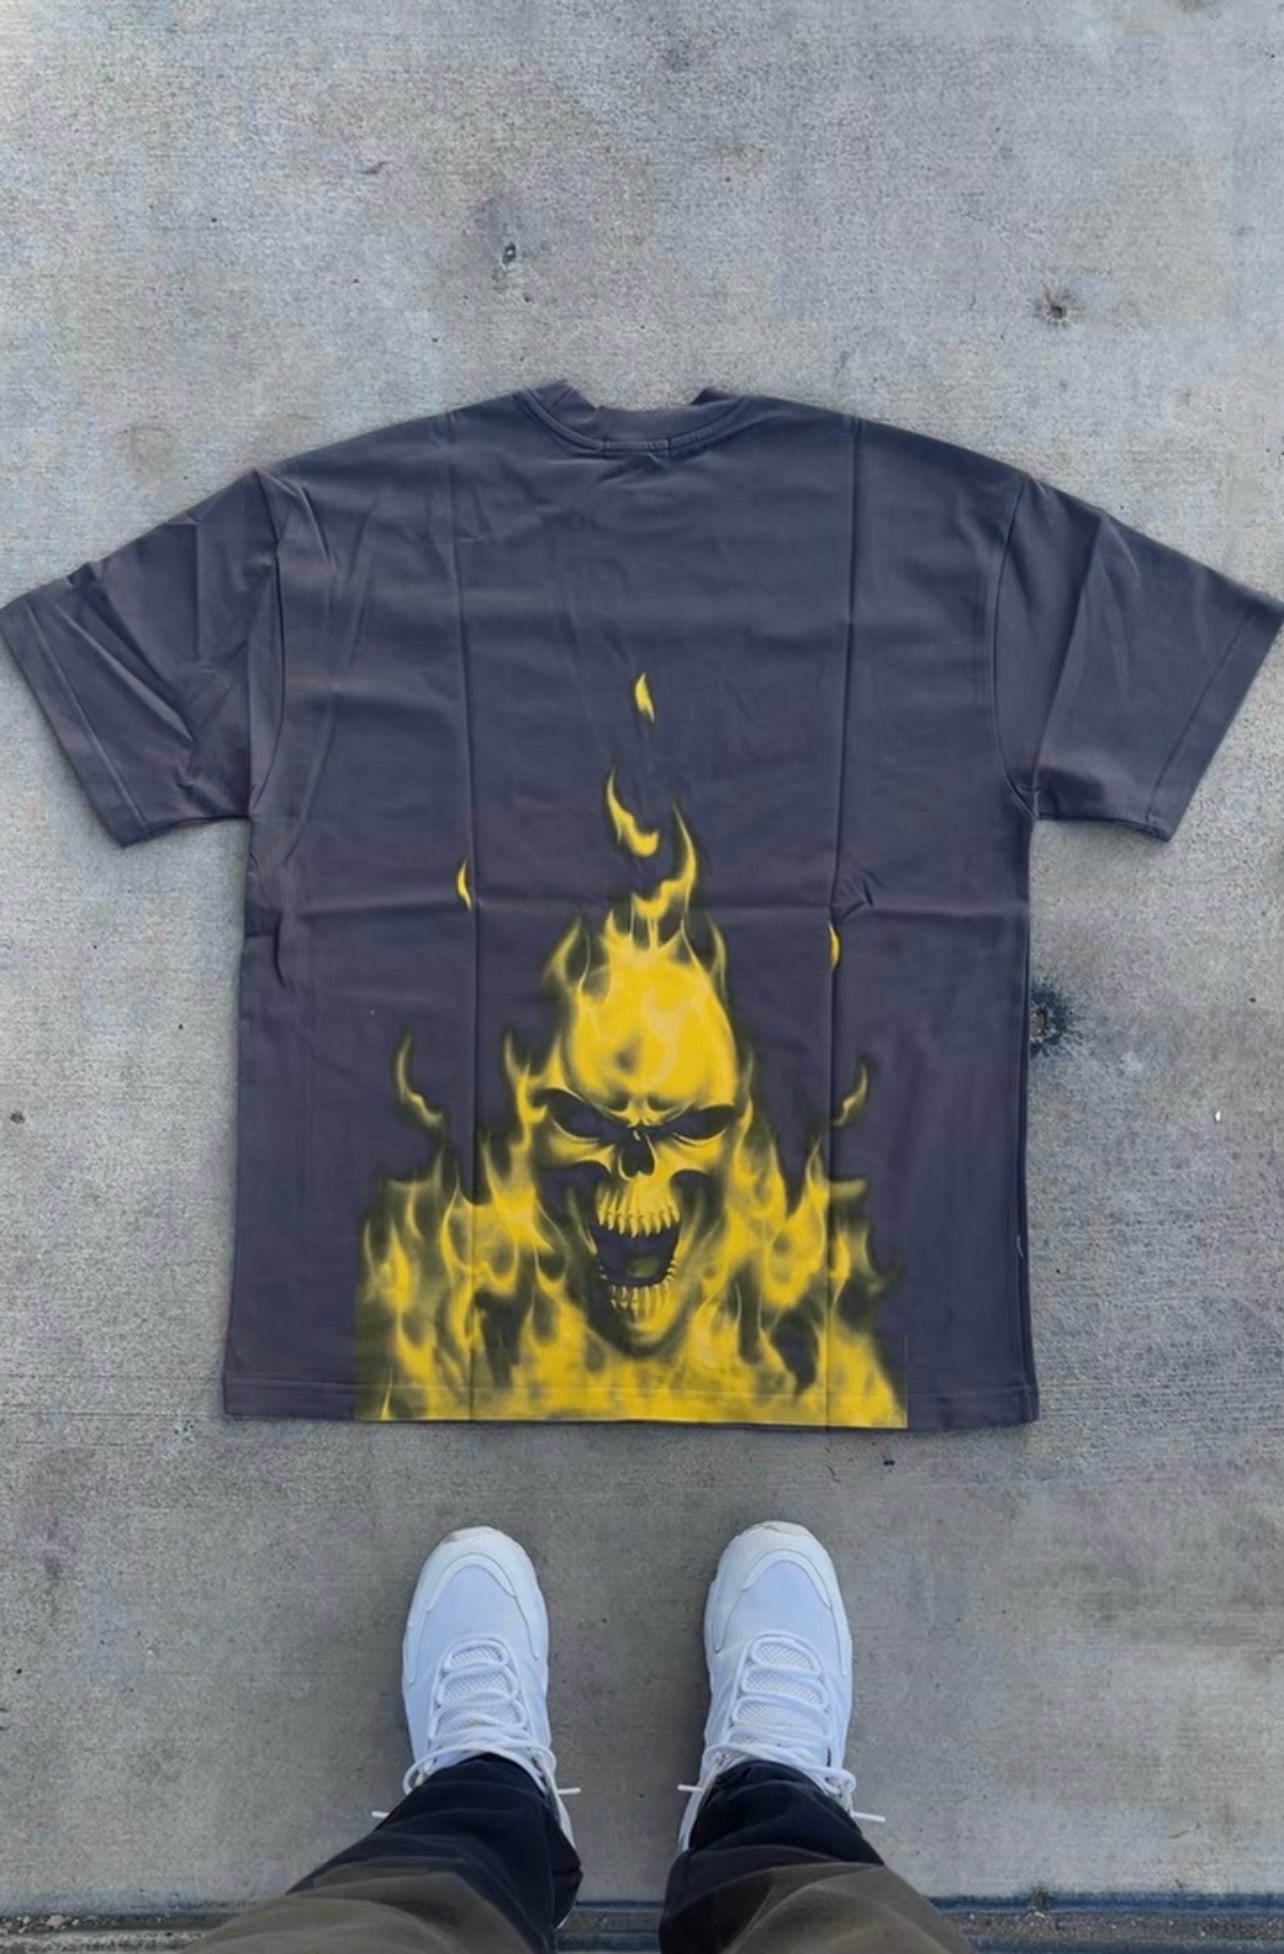 Inferno Elegance: Flame and Skull Design Shirt for Bold Appeal